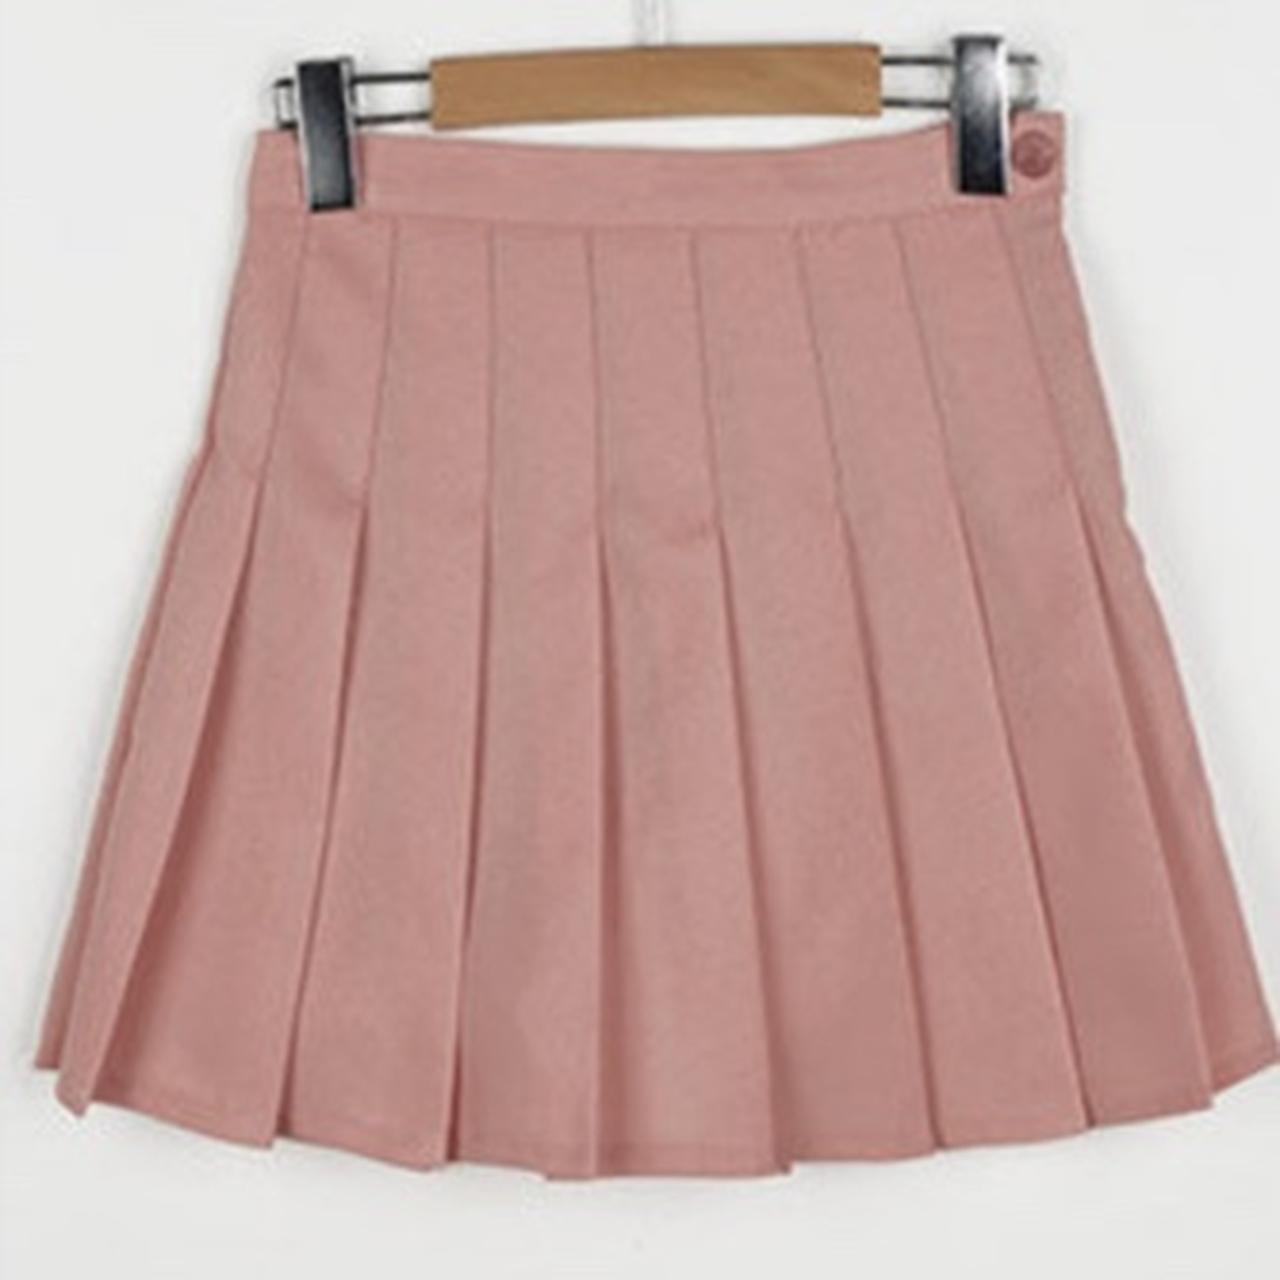 Stylenanda Women's Pink Skirt (3)